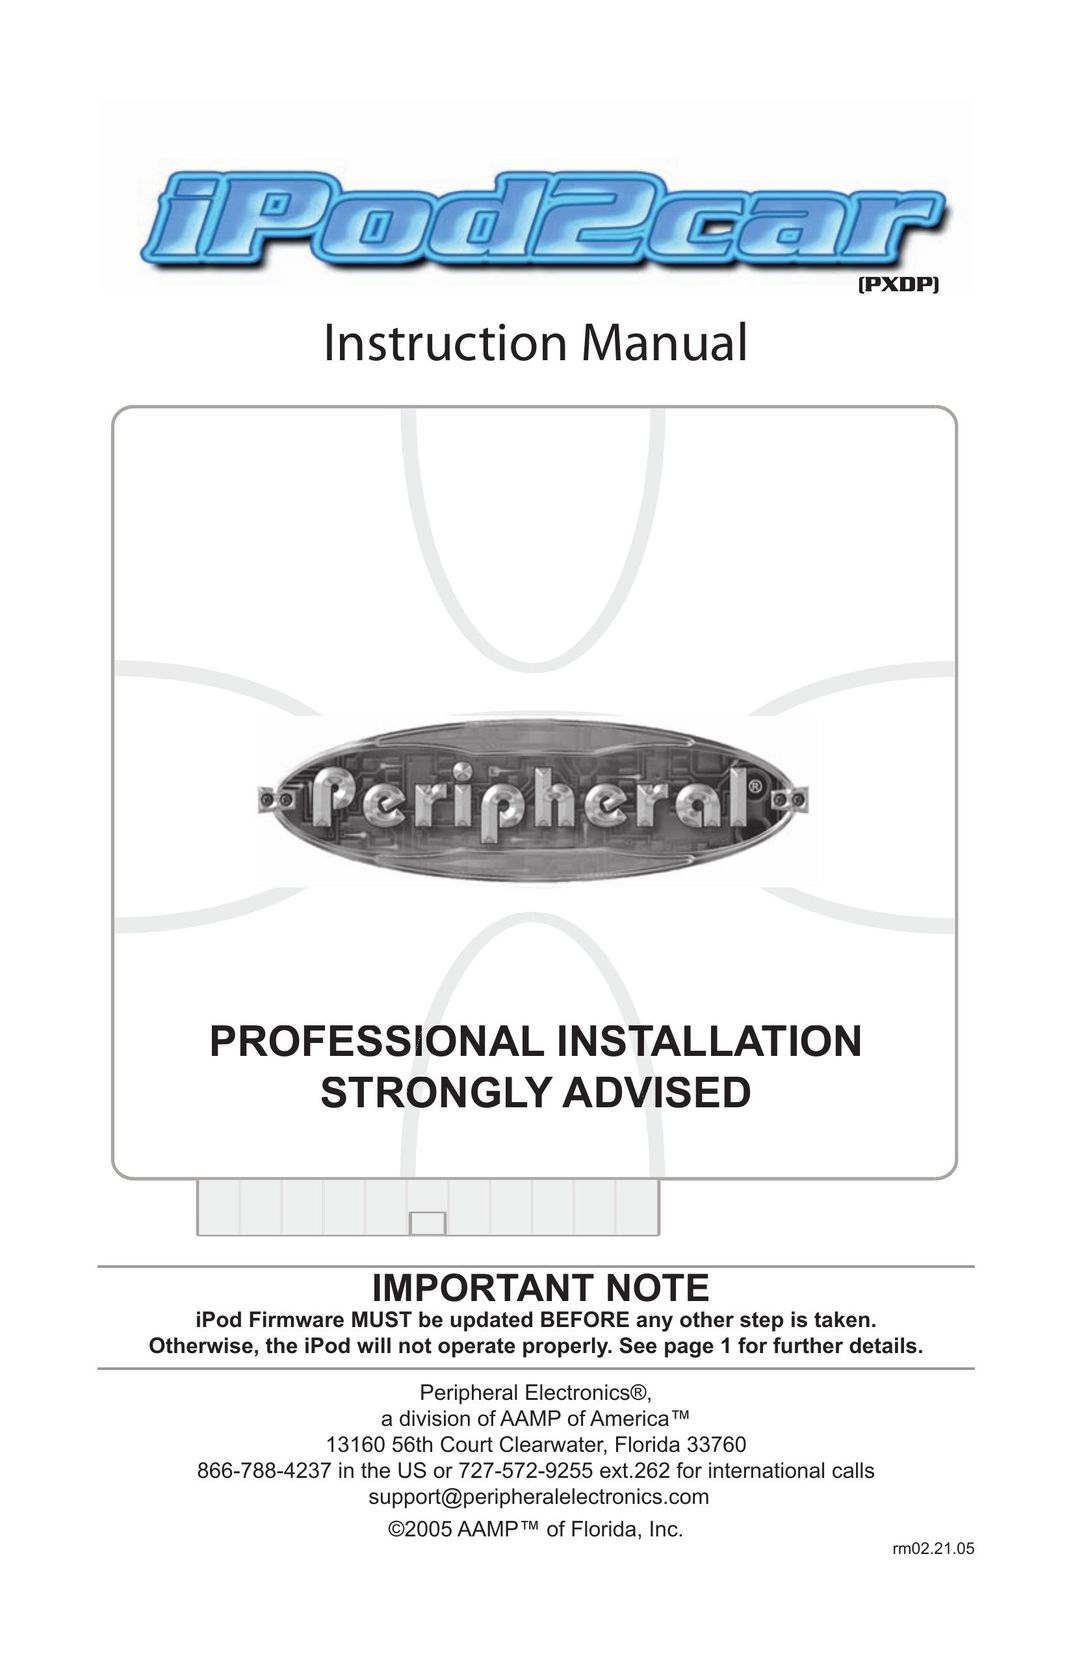 Peripheral Electronics iPod2car Network Card User Manual